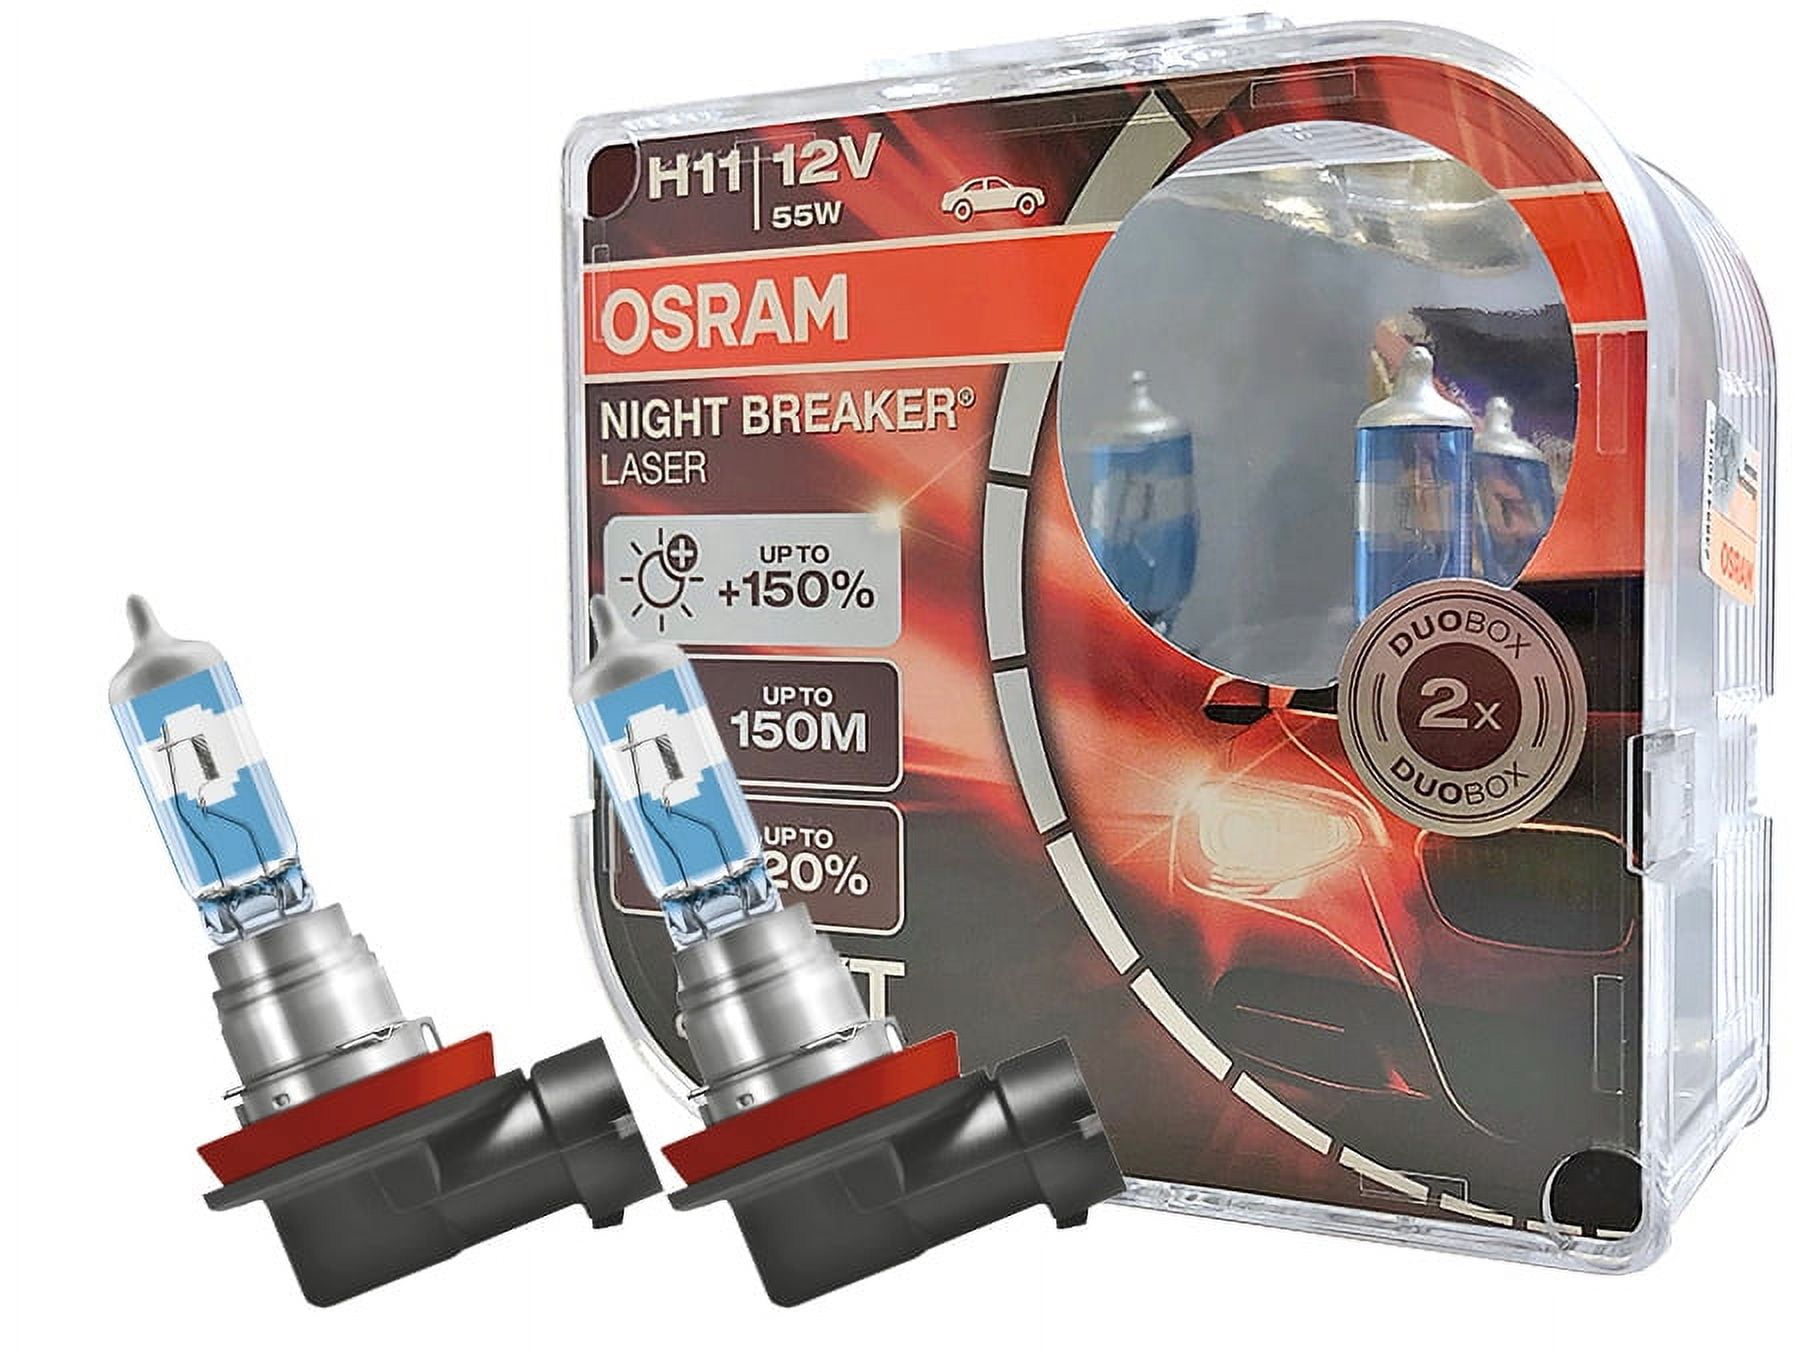 H11 Osram Night Breaker Laser Halogen Headlight Bulb 64211NL (Pack of 2)